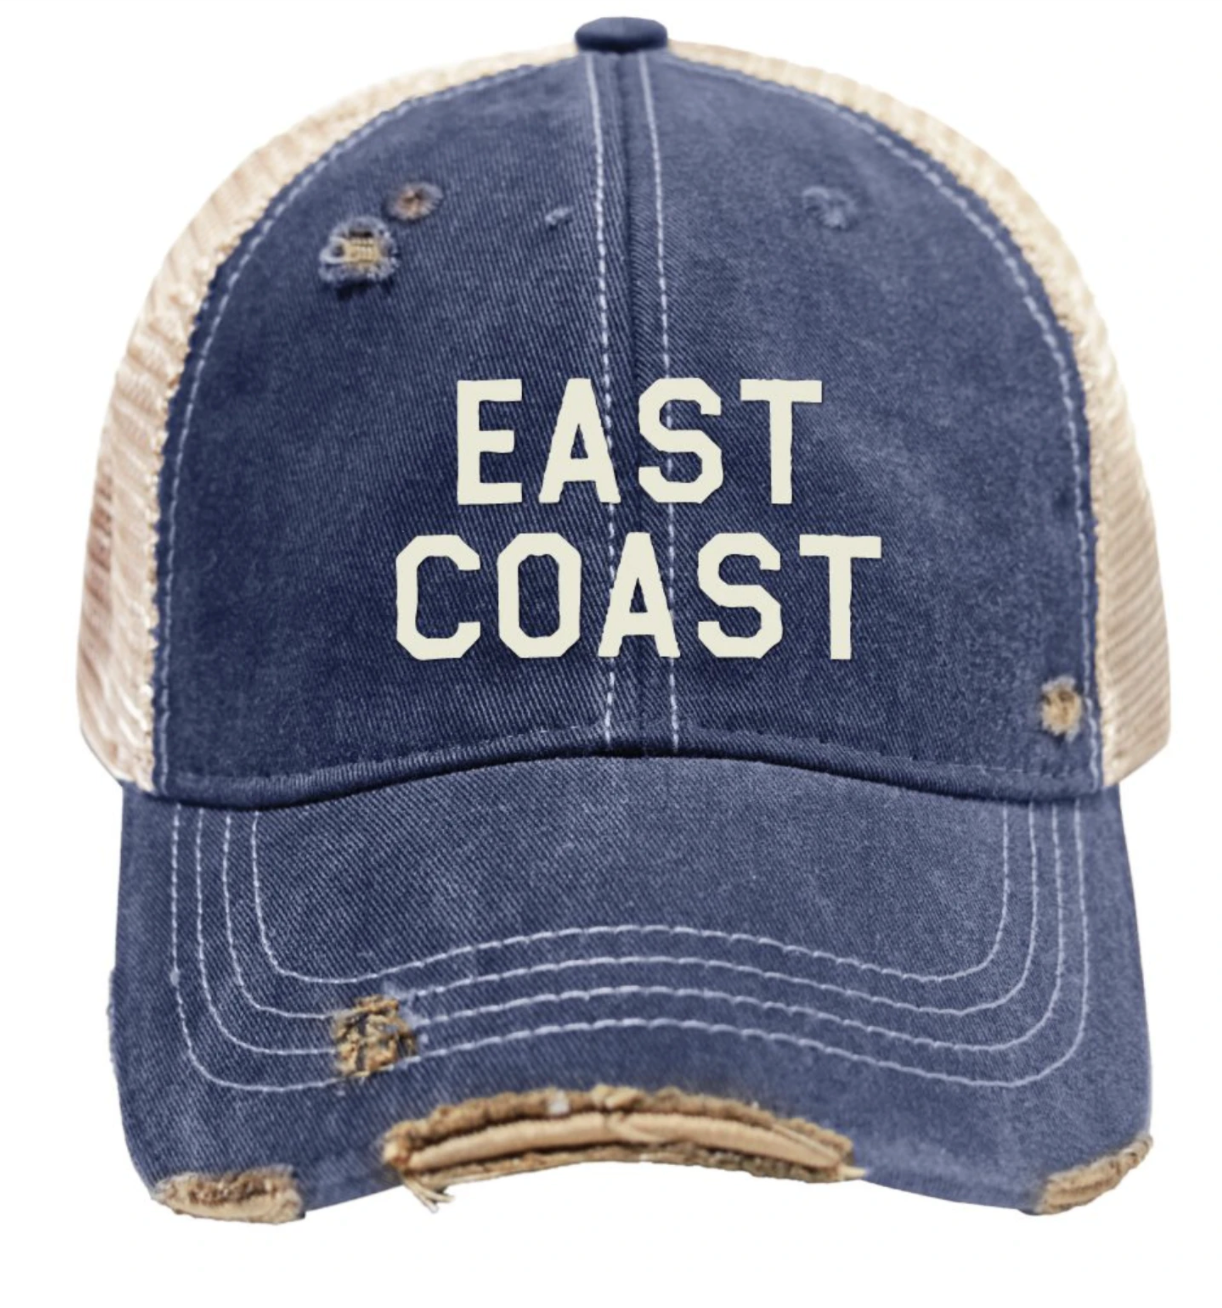 East Coast Snap Back Trucker Cap